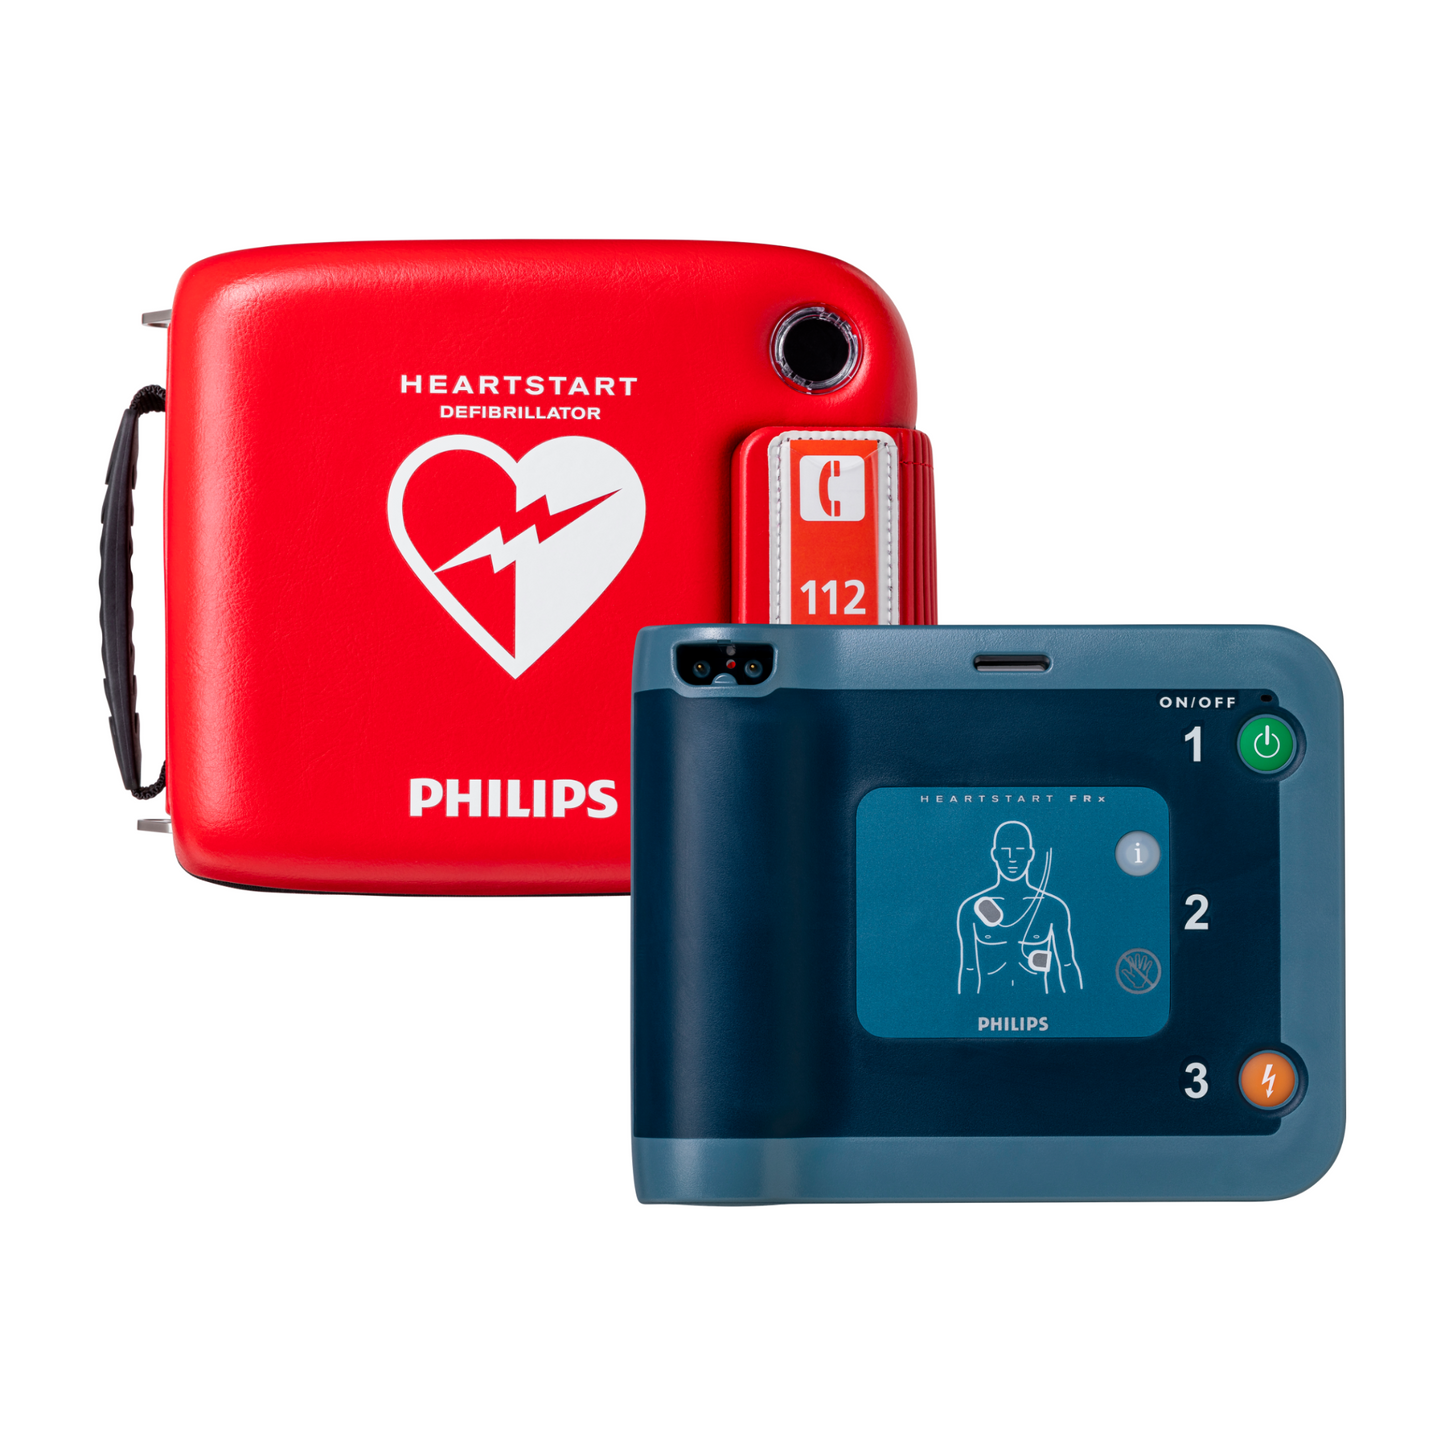 Pack complet Philips Heartstart - FRx DAE avec housse de protection